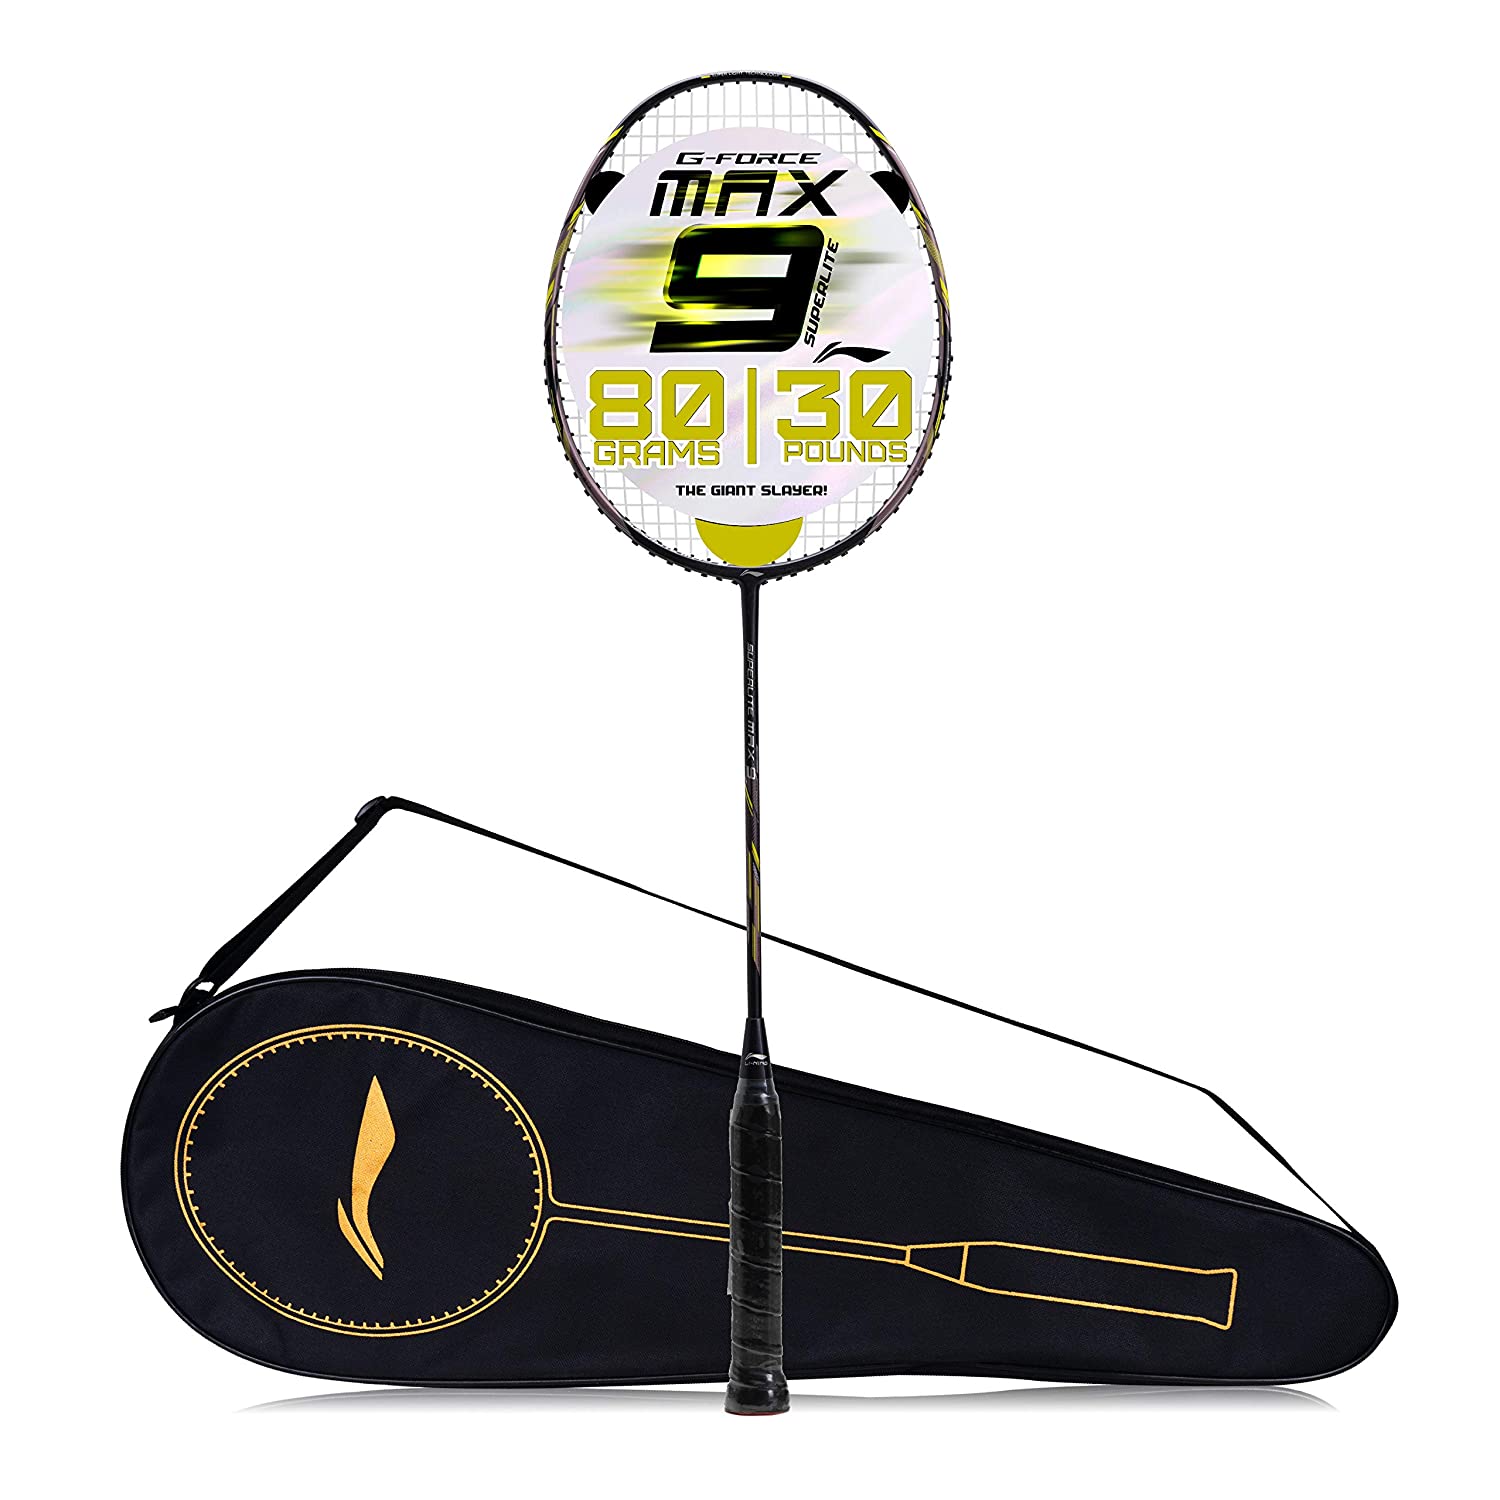 Li-Ning AYPR062-5 Max 9 Strung Badminton Racquet, Black - Best Price online Prokicksports.com